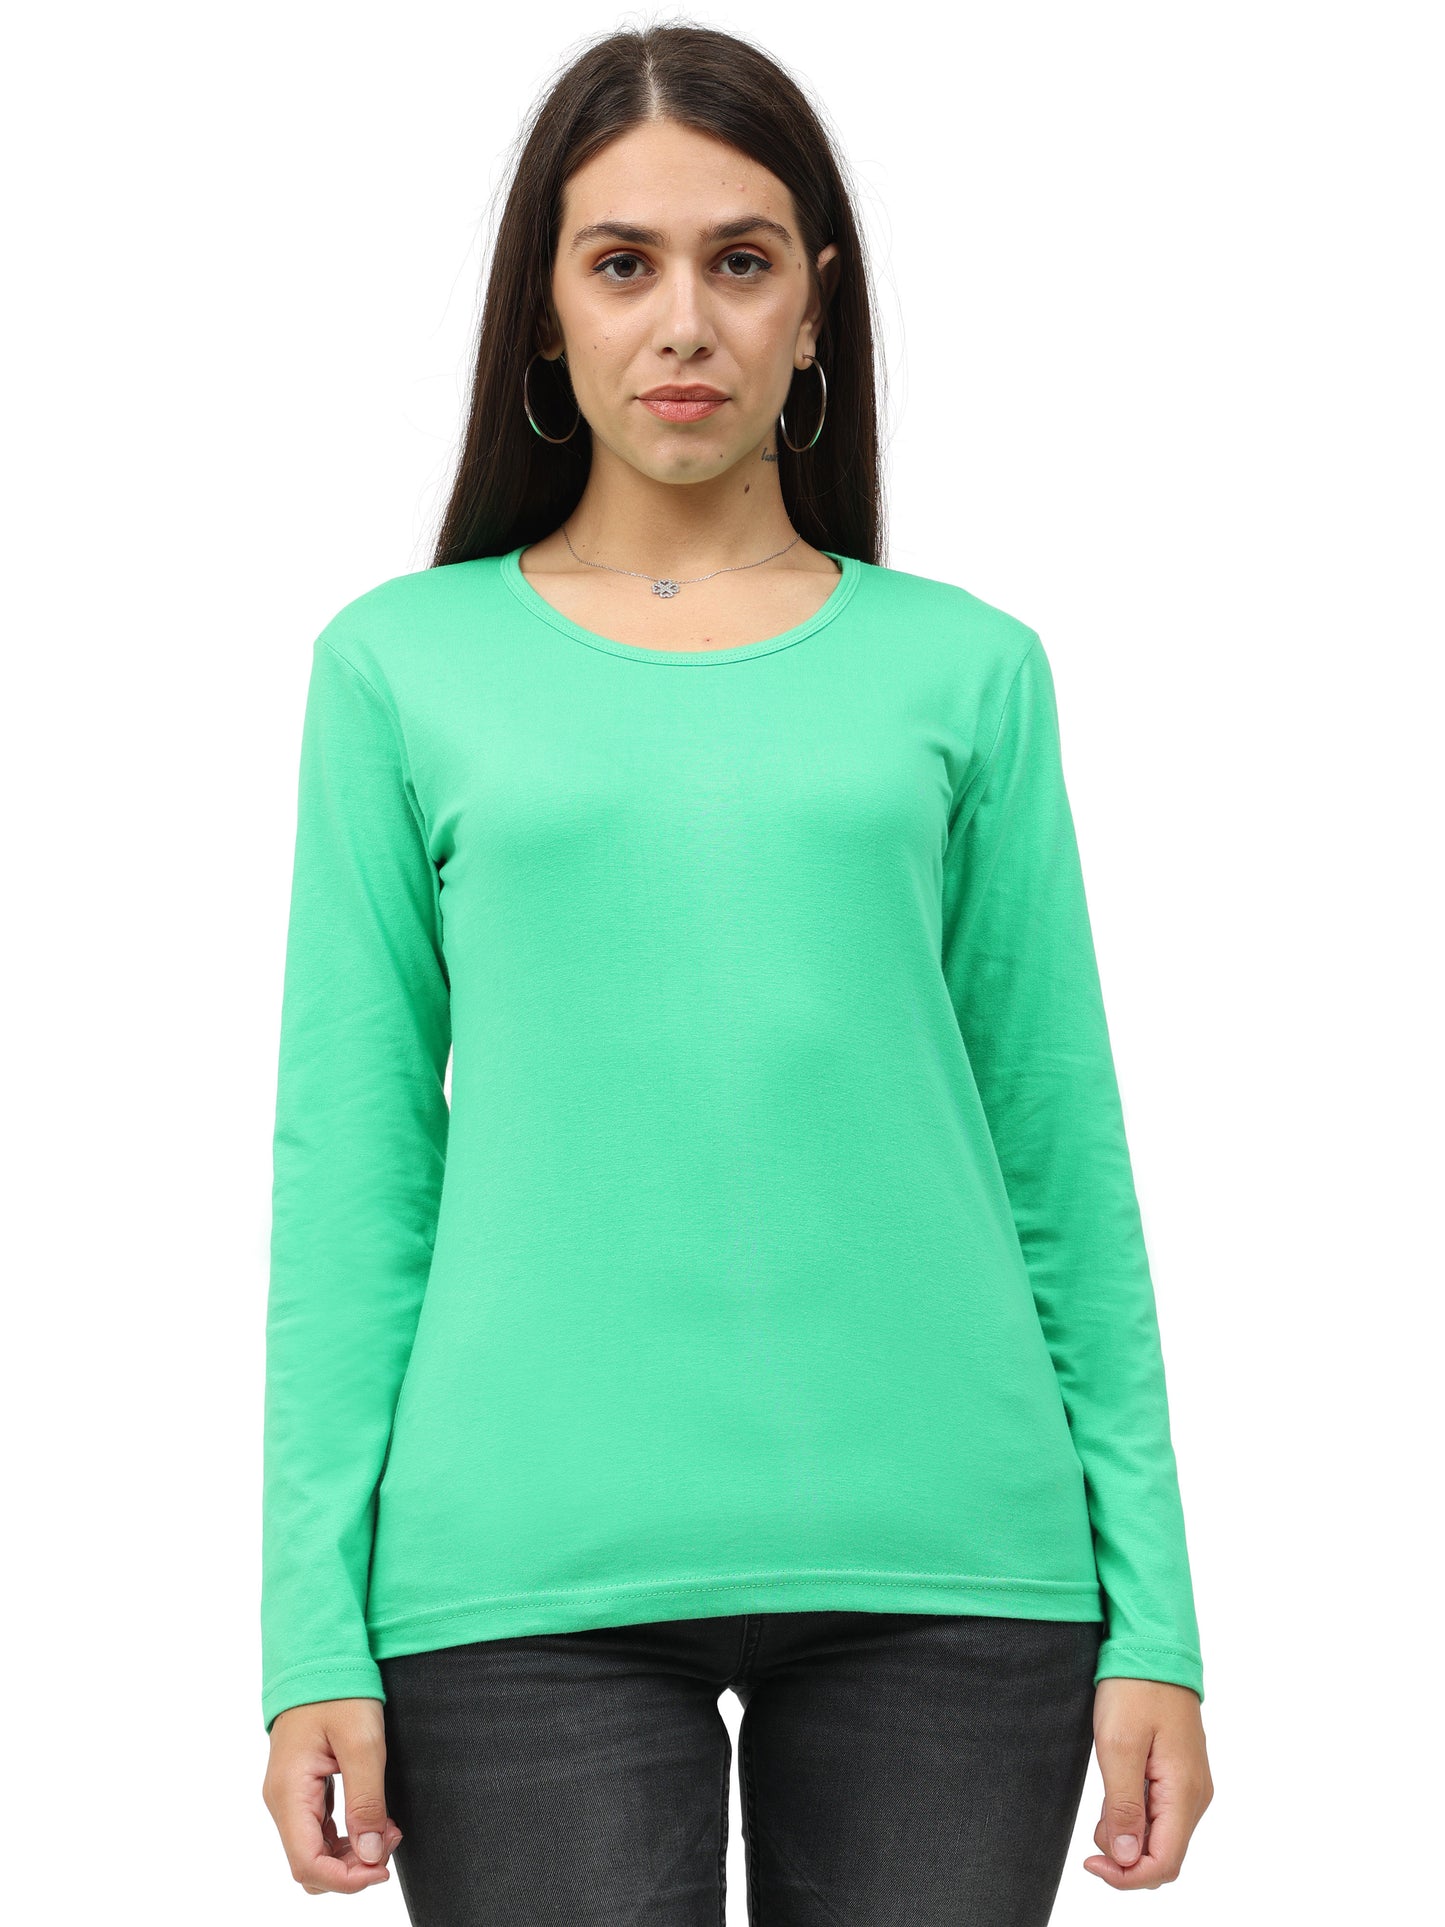 Pista Green Plain Full Sleeve Ladies Thermal Wear at Best Price in Ludhiana